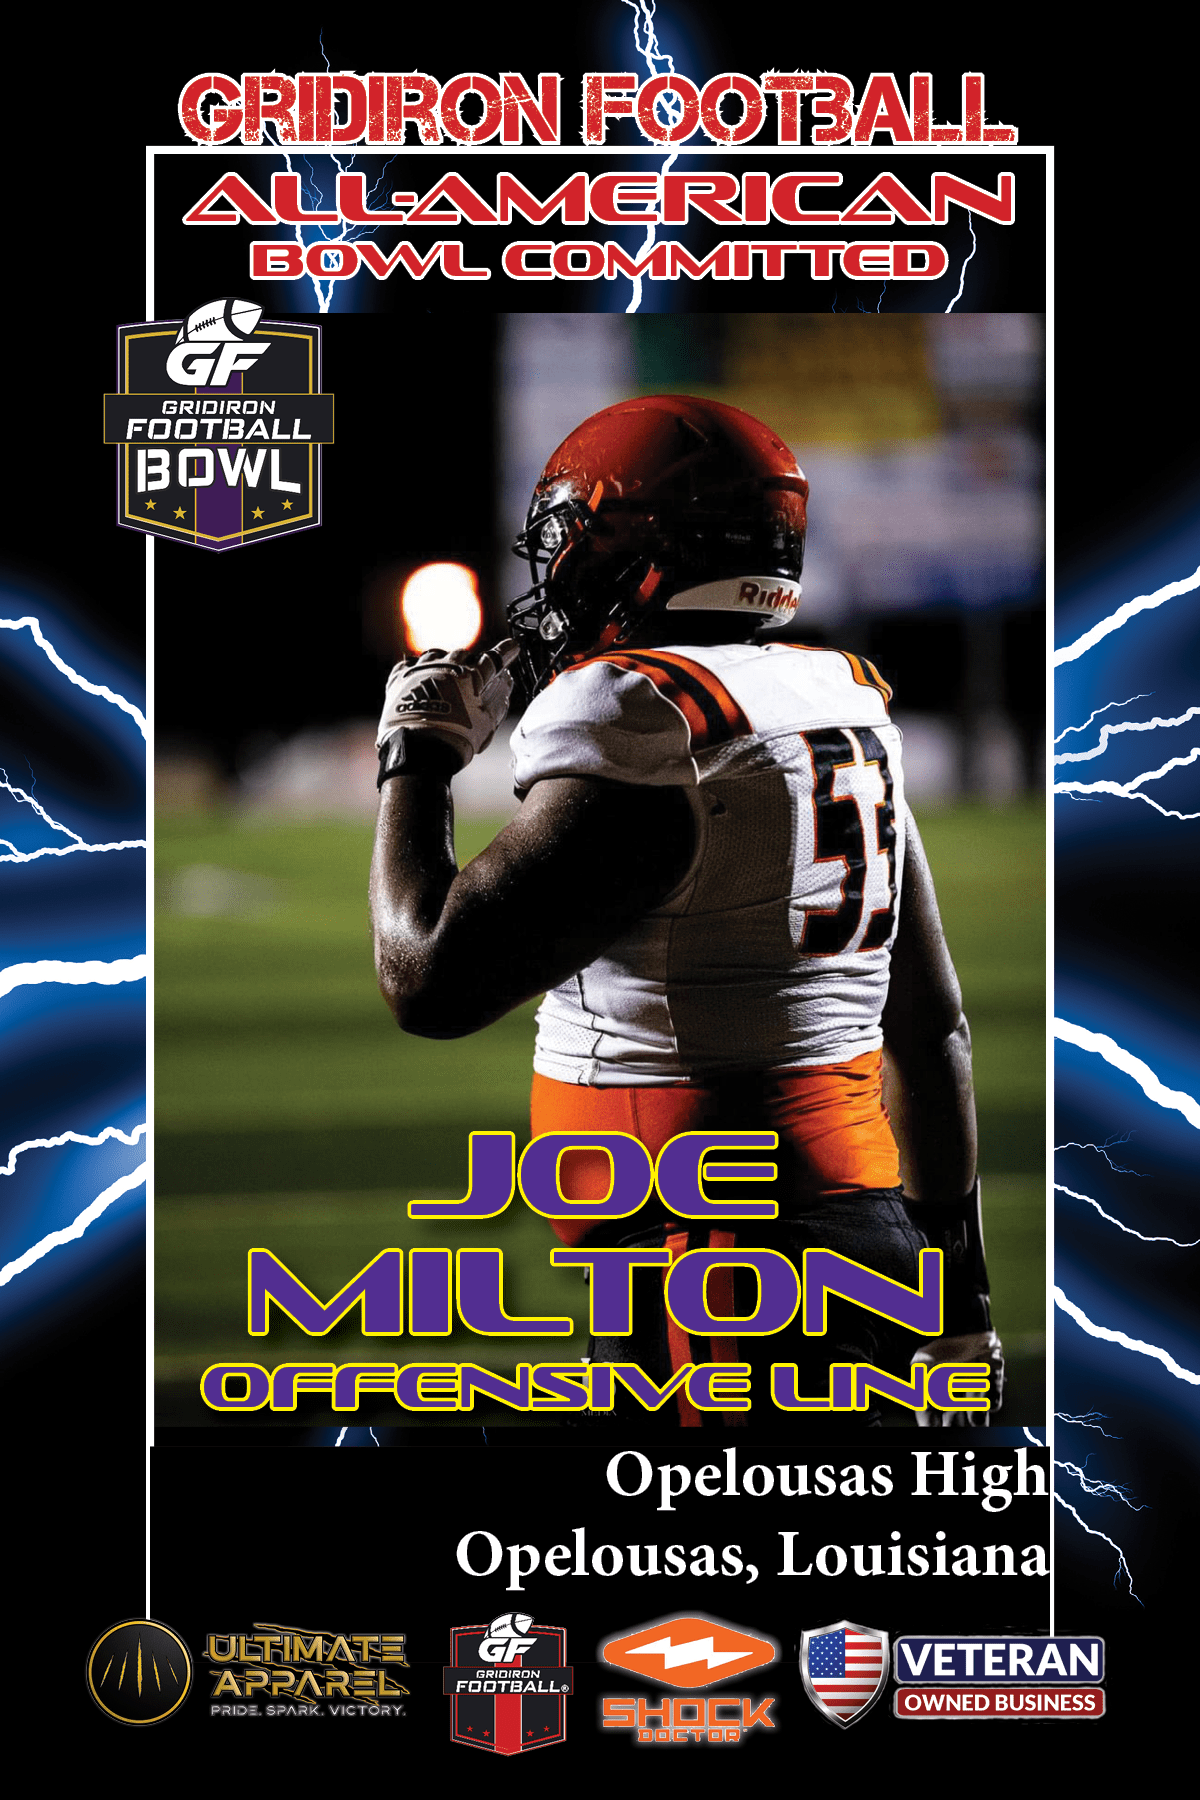 BREAKING NEWS: Opelousas High School (Opelousas, LA) OL Joe Milton Commits To The Gridiron Football All-American Bowl Game